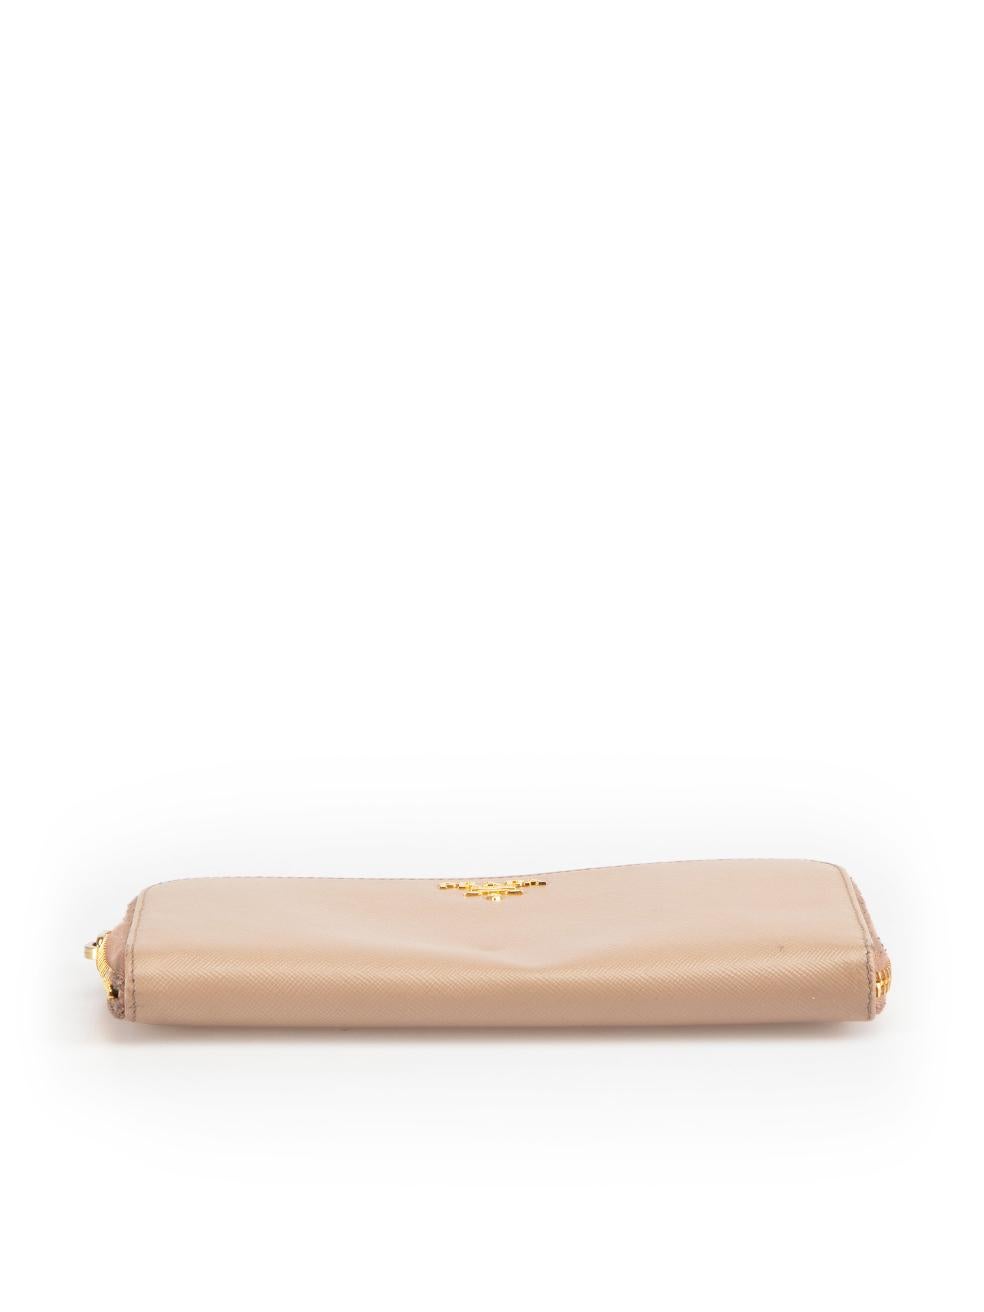 Women's Prada Beige Saffiano Leather Zipped Wallet For Sale